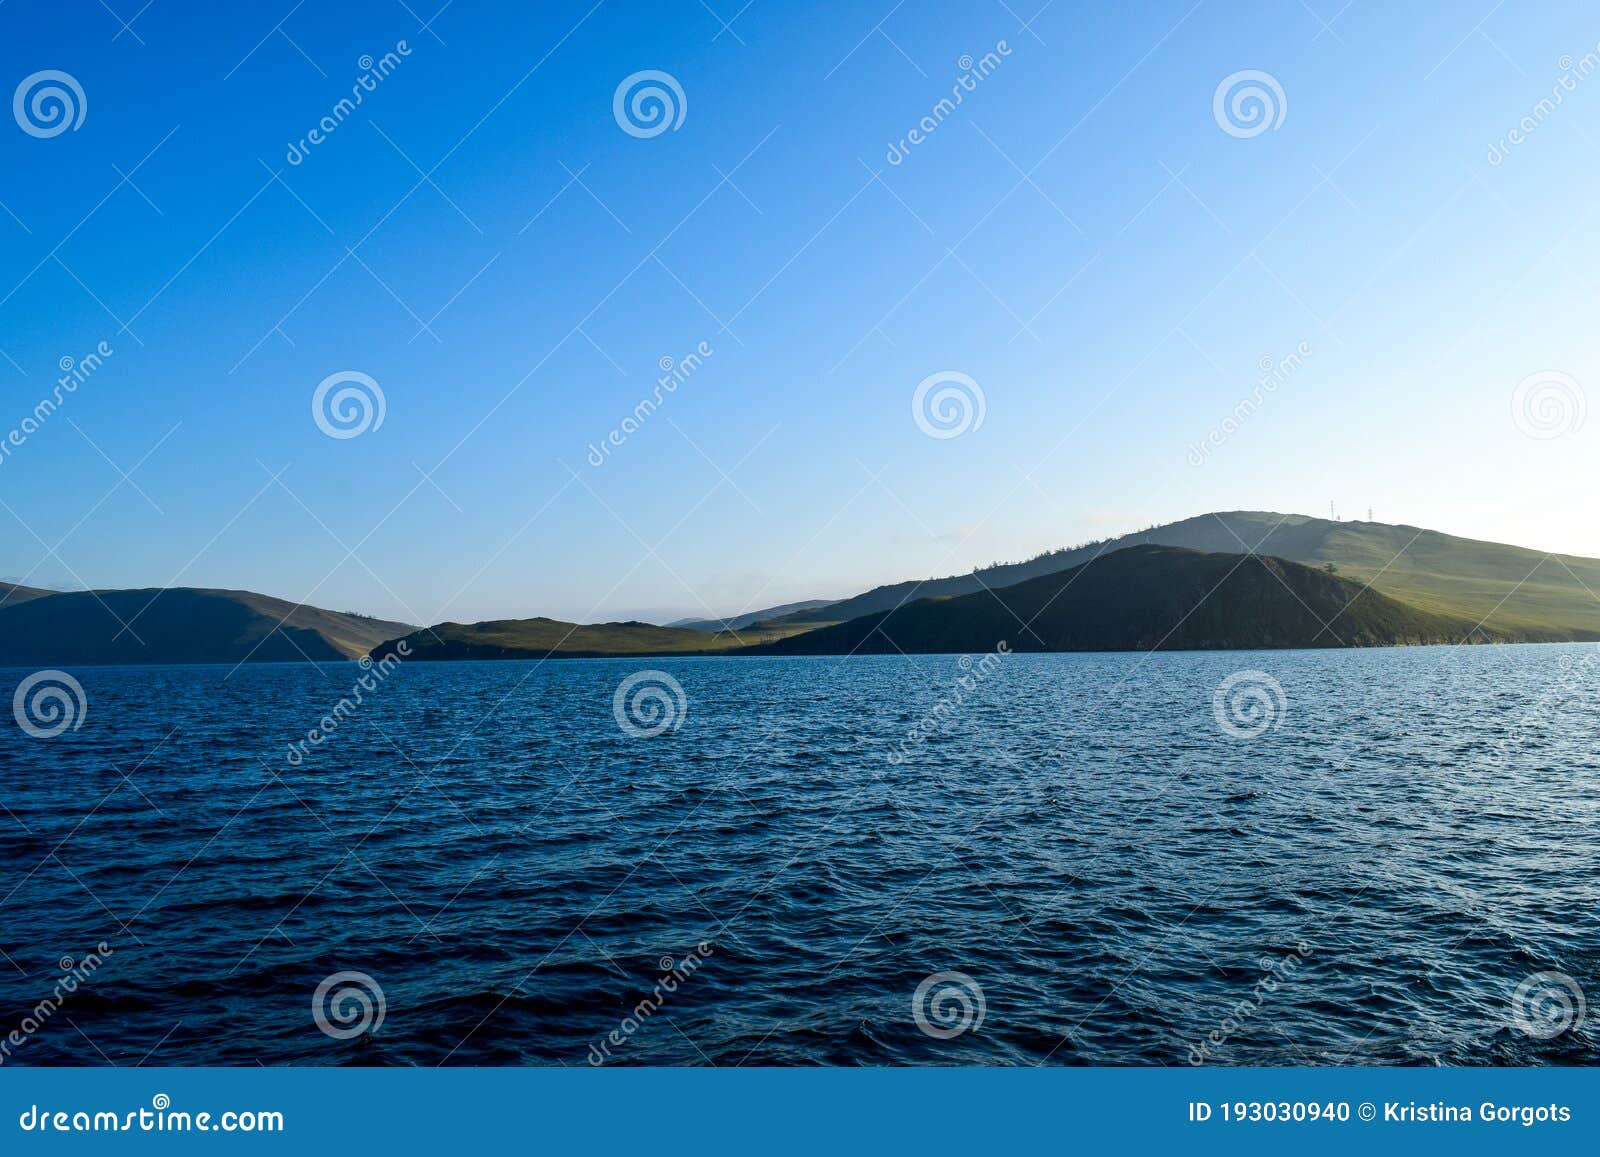 great lake baikal overlooking the mountains, small sea olkhon island